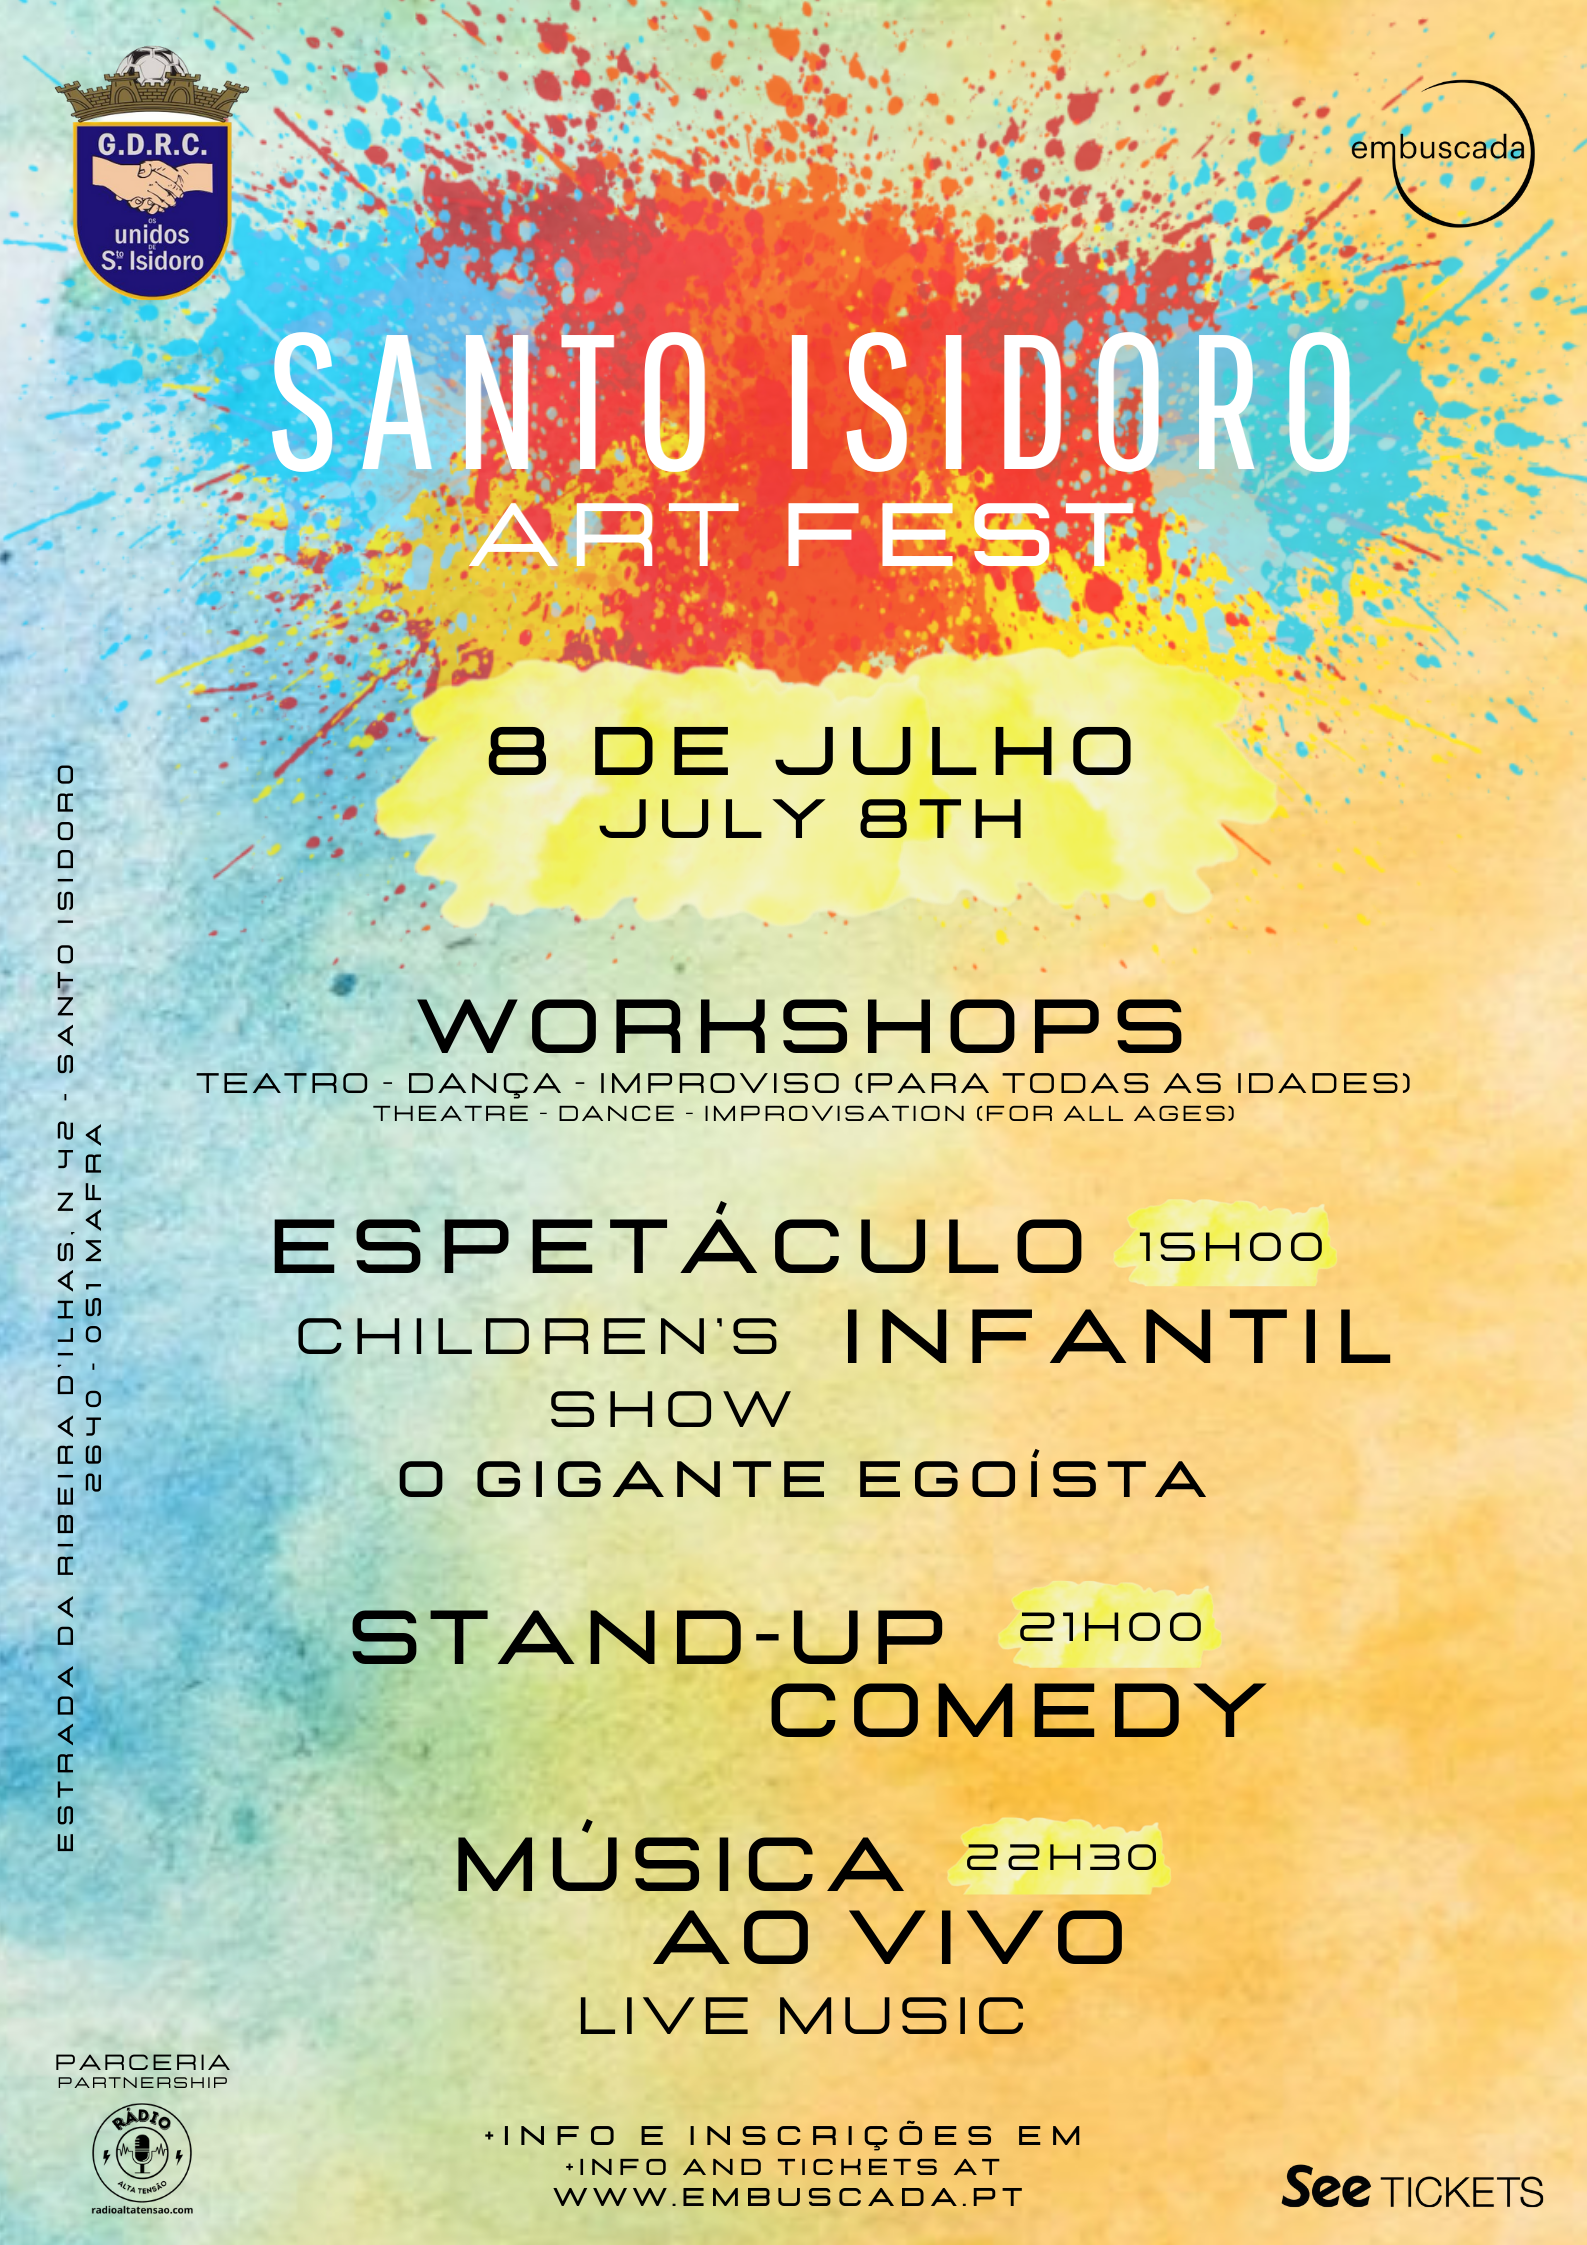 Santo Isidoro Art Fest aaa